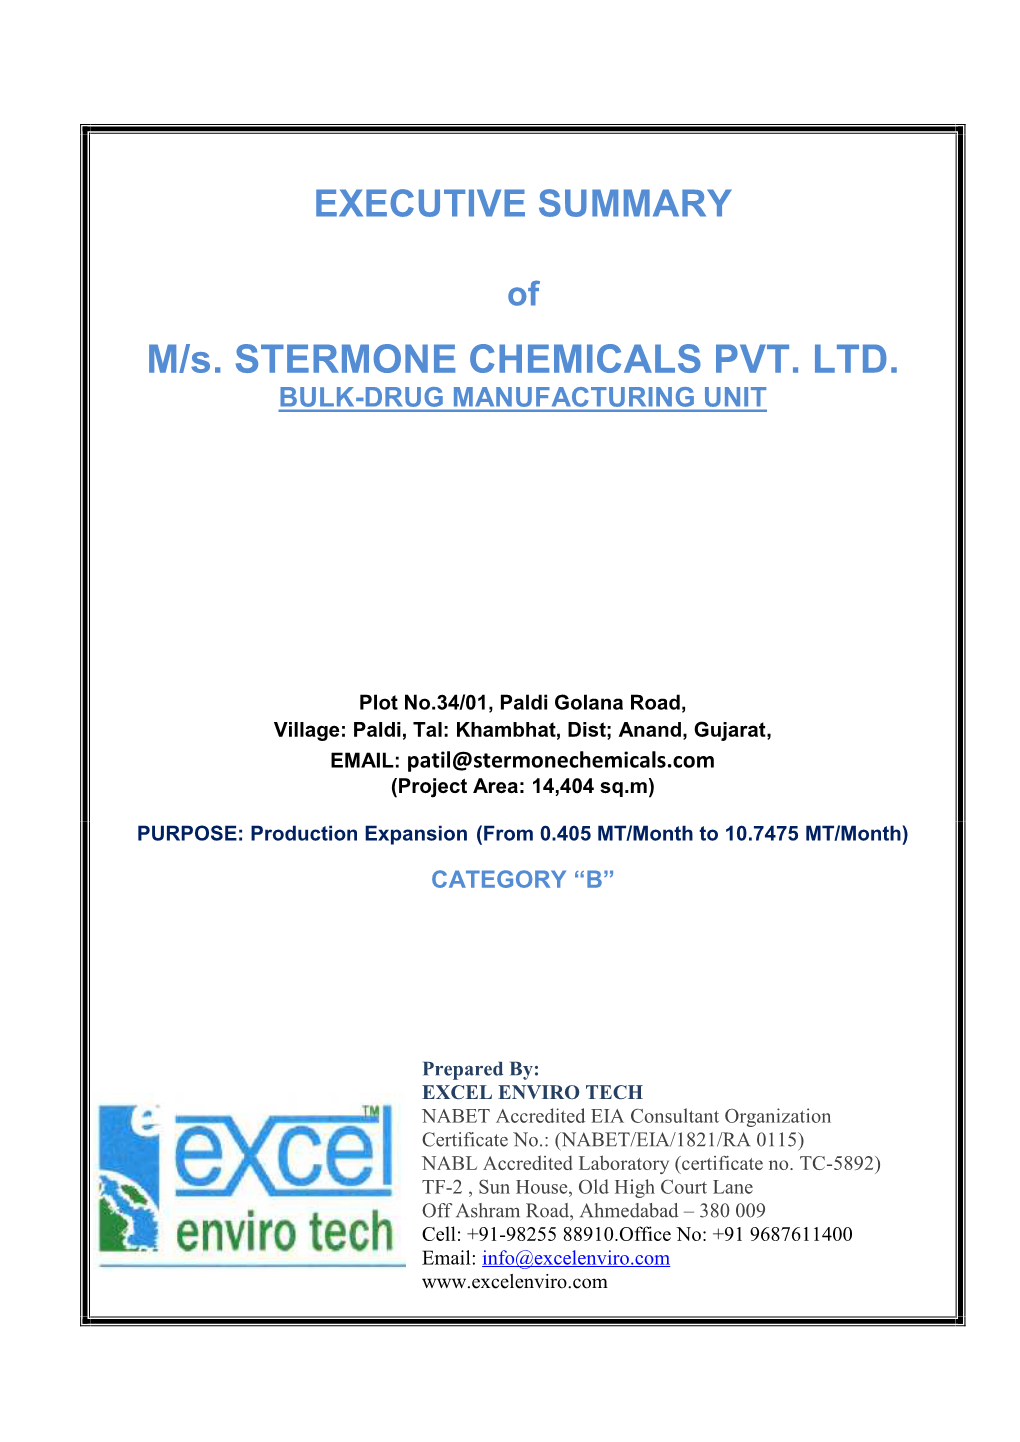 M/S. STERMONE CHEMICALS PVT. LTD. BULK-DRUG MANUFACTURING UNIT